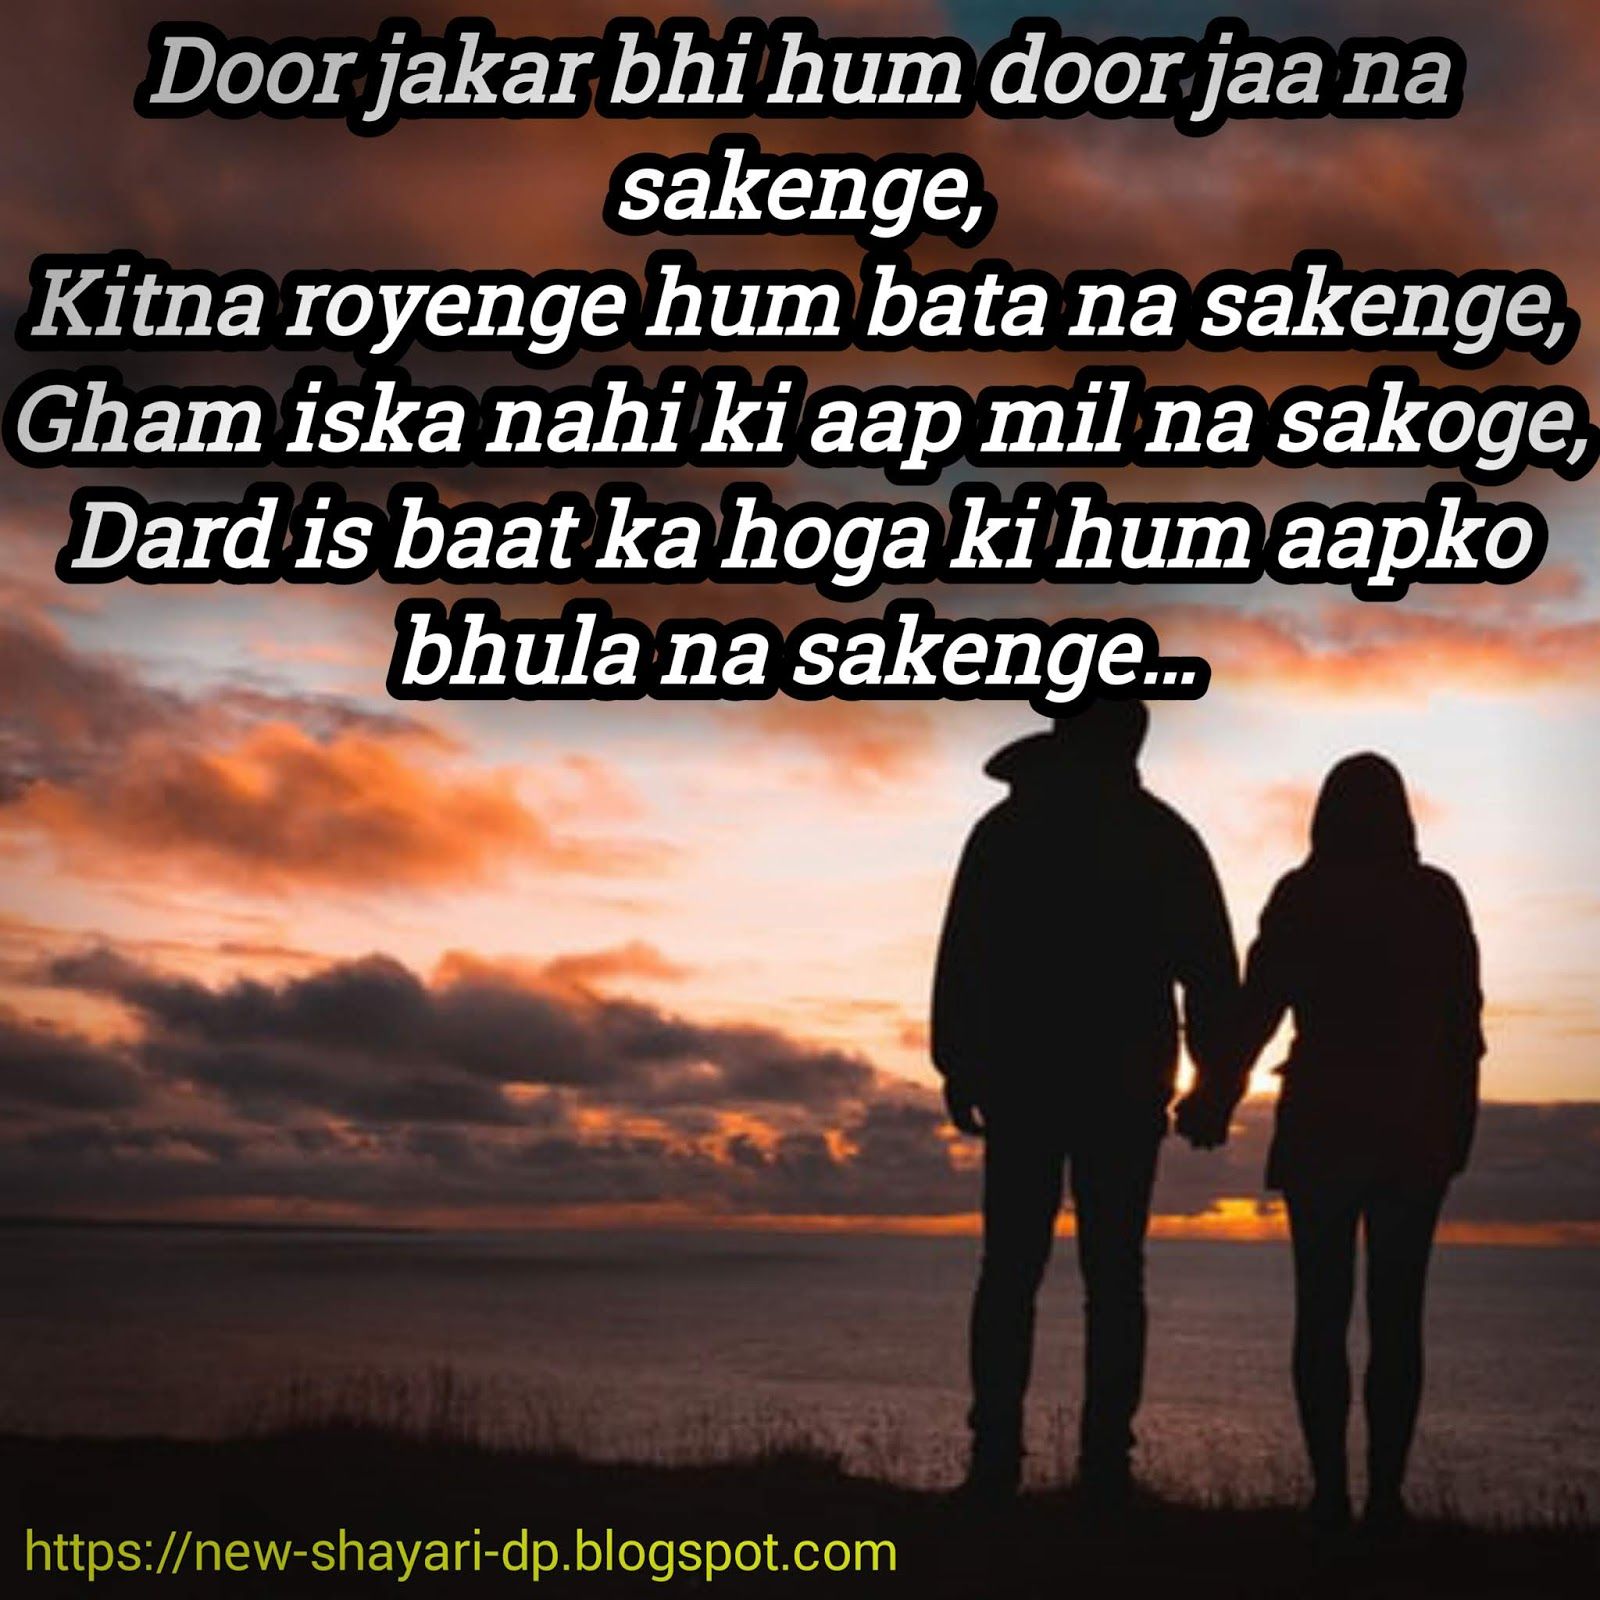 50+Love Shayari Image Hindi English ; Love Shayari With Photo; Love Shayari Whatsapp Dp